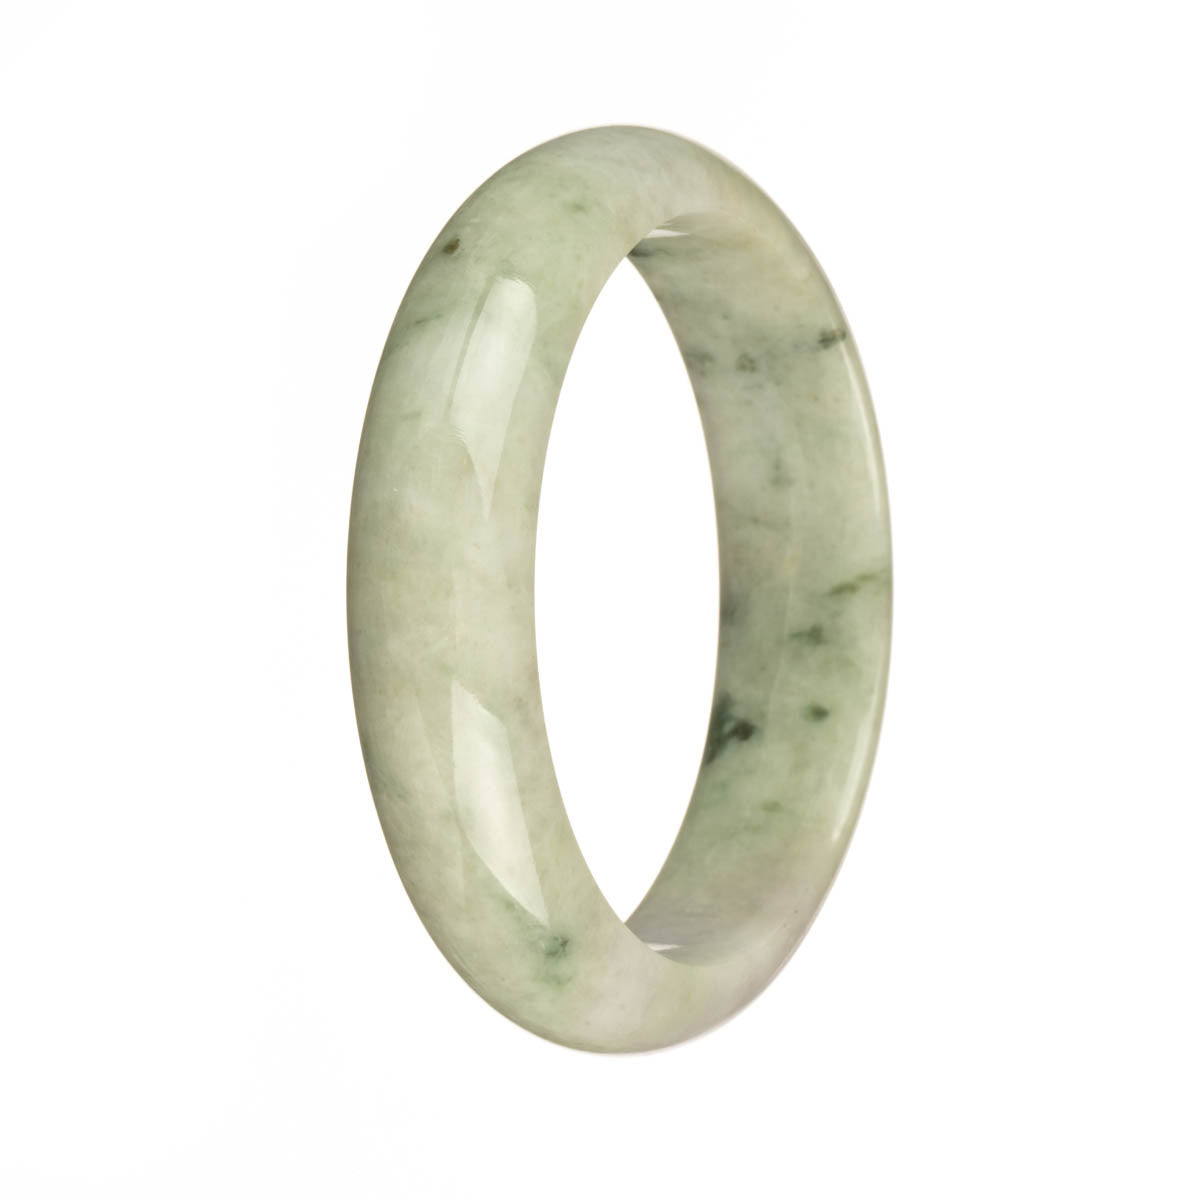 Genuine Grade A Pale Green and White with Dark Green Patterns Jadeite Jade Bangle - 59mm Half Moon